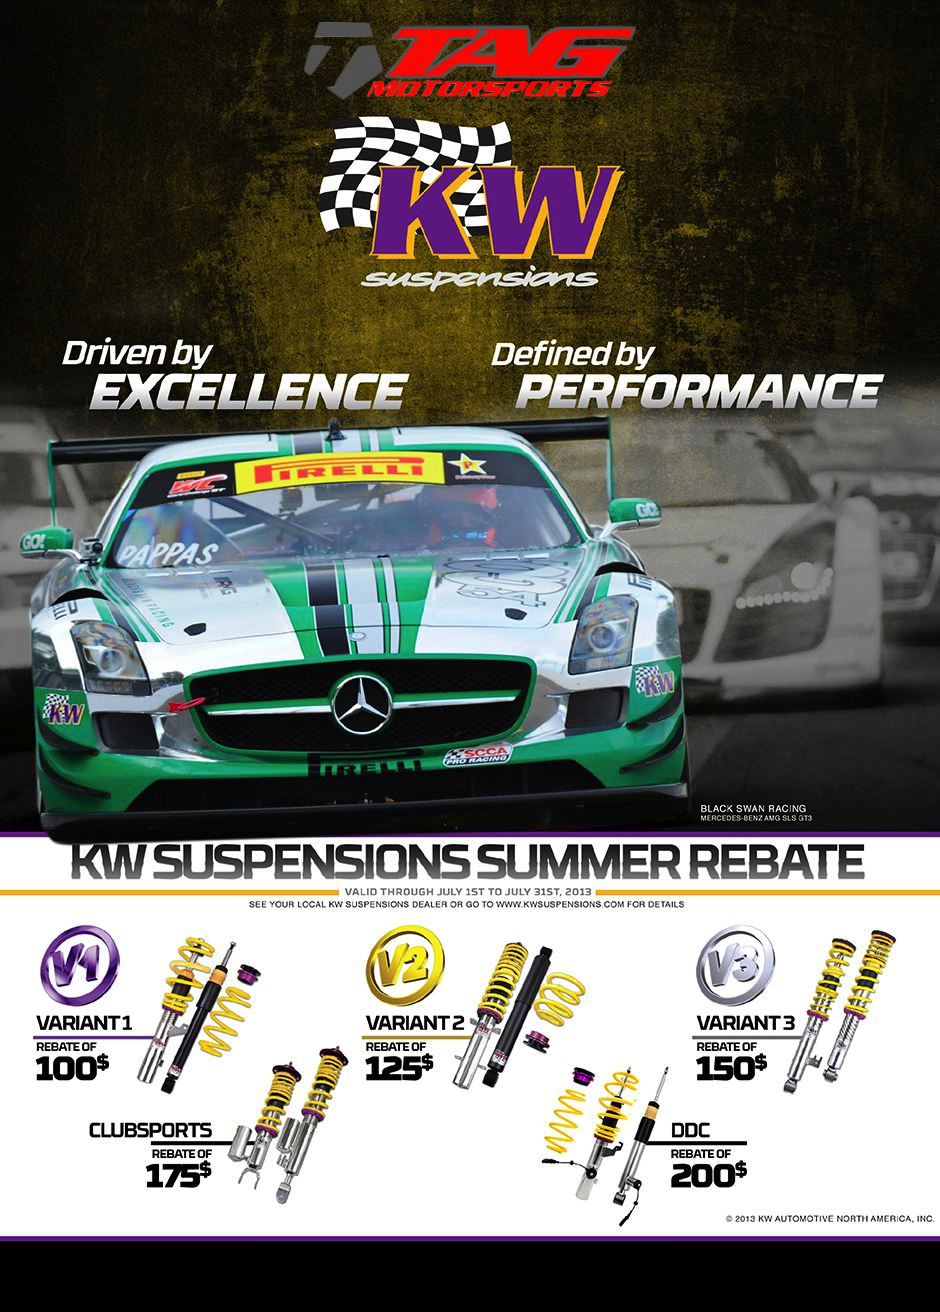 kw-suspension-summer-rebate-sale-tag-motorsports-blog